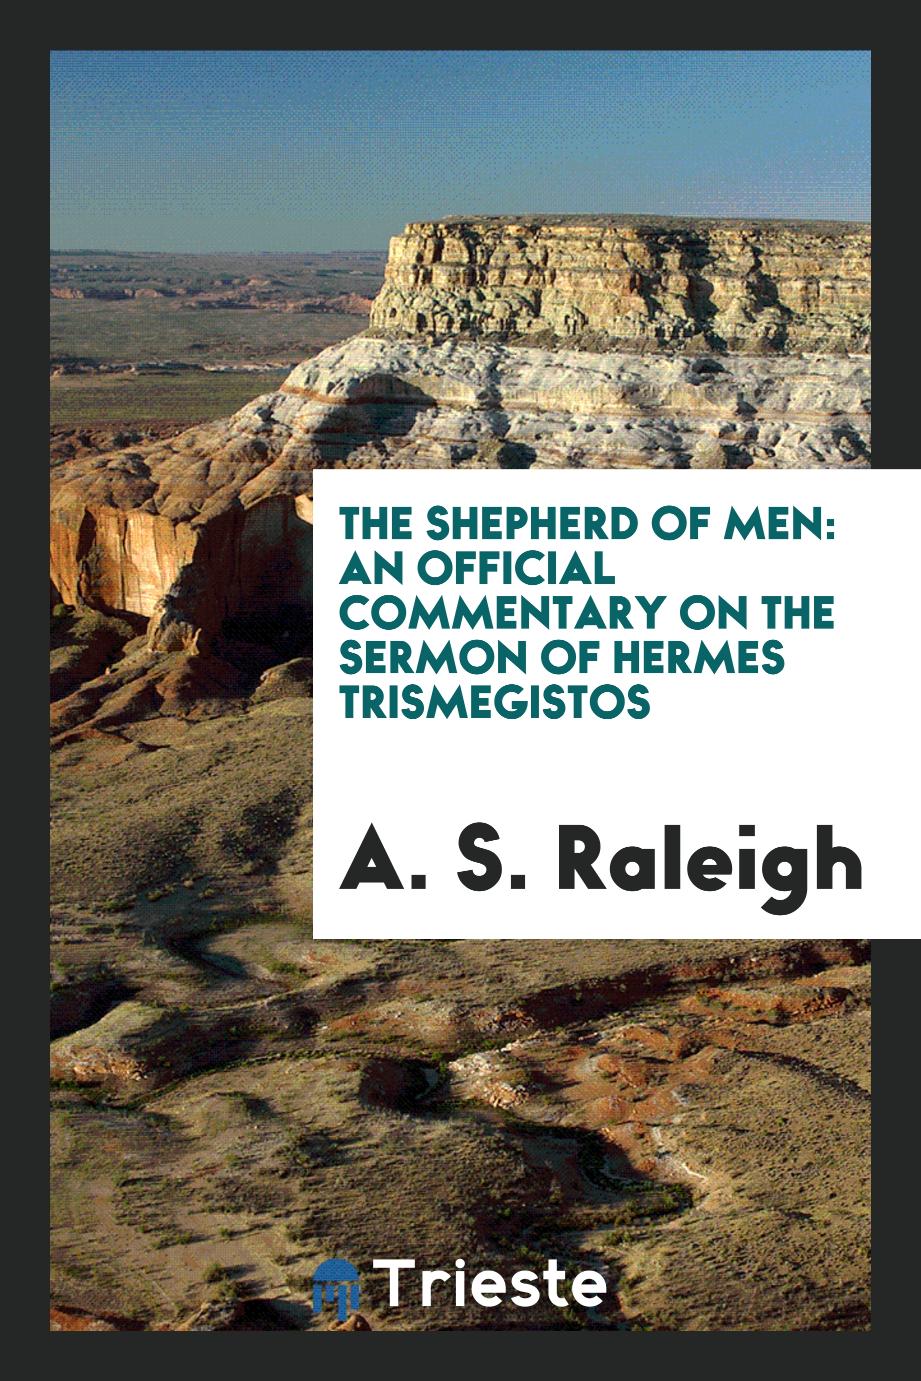 The Shepherd of Men: An Official Commentary on the Sermon of Hermes Trismegistos